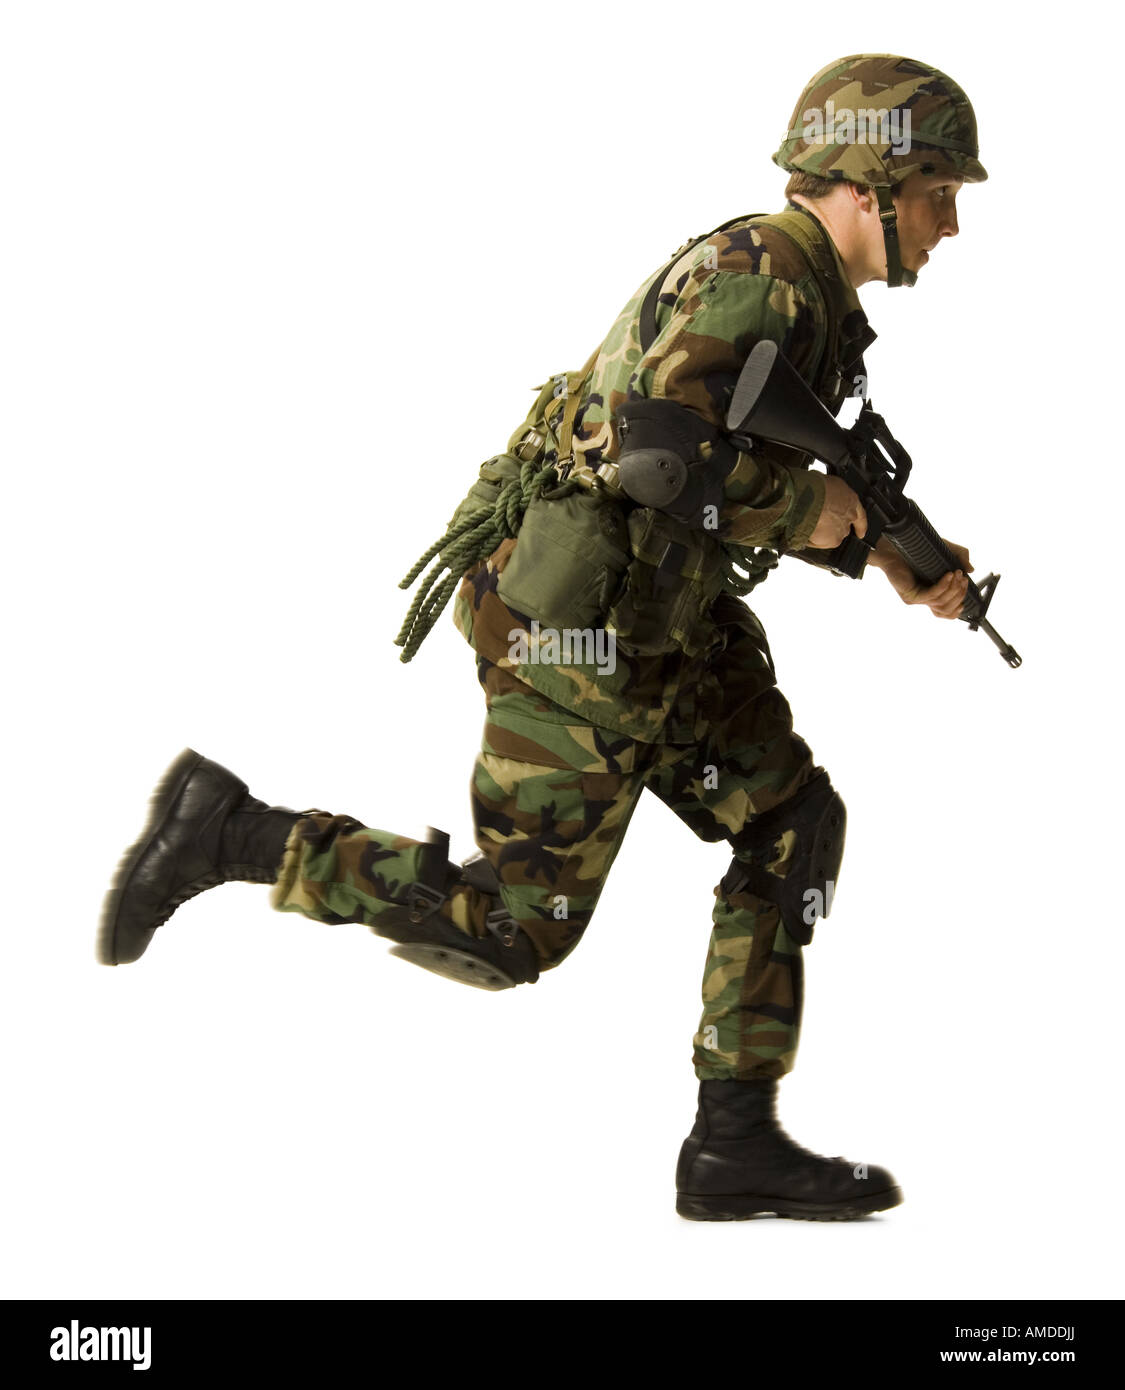 Soldier in uniform with gun running Stock Photo - Alamy